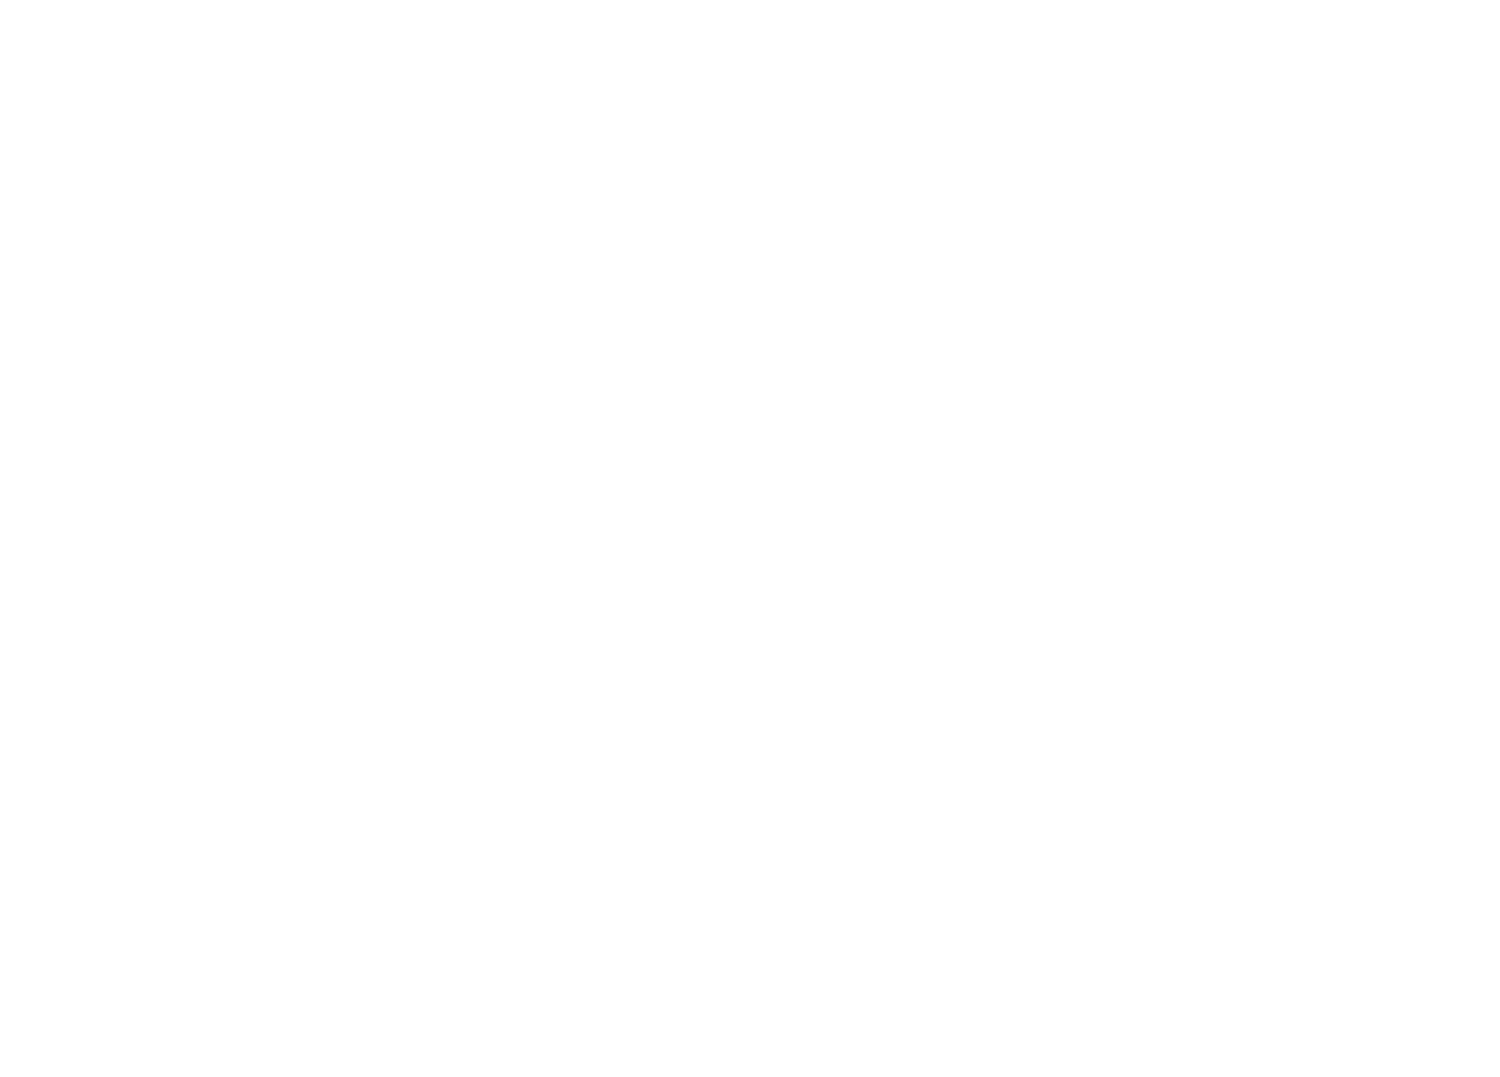 BLIEVE Media